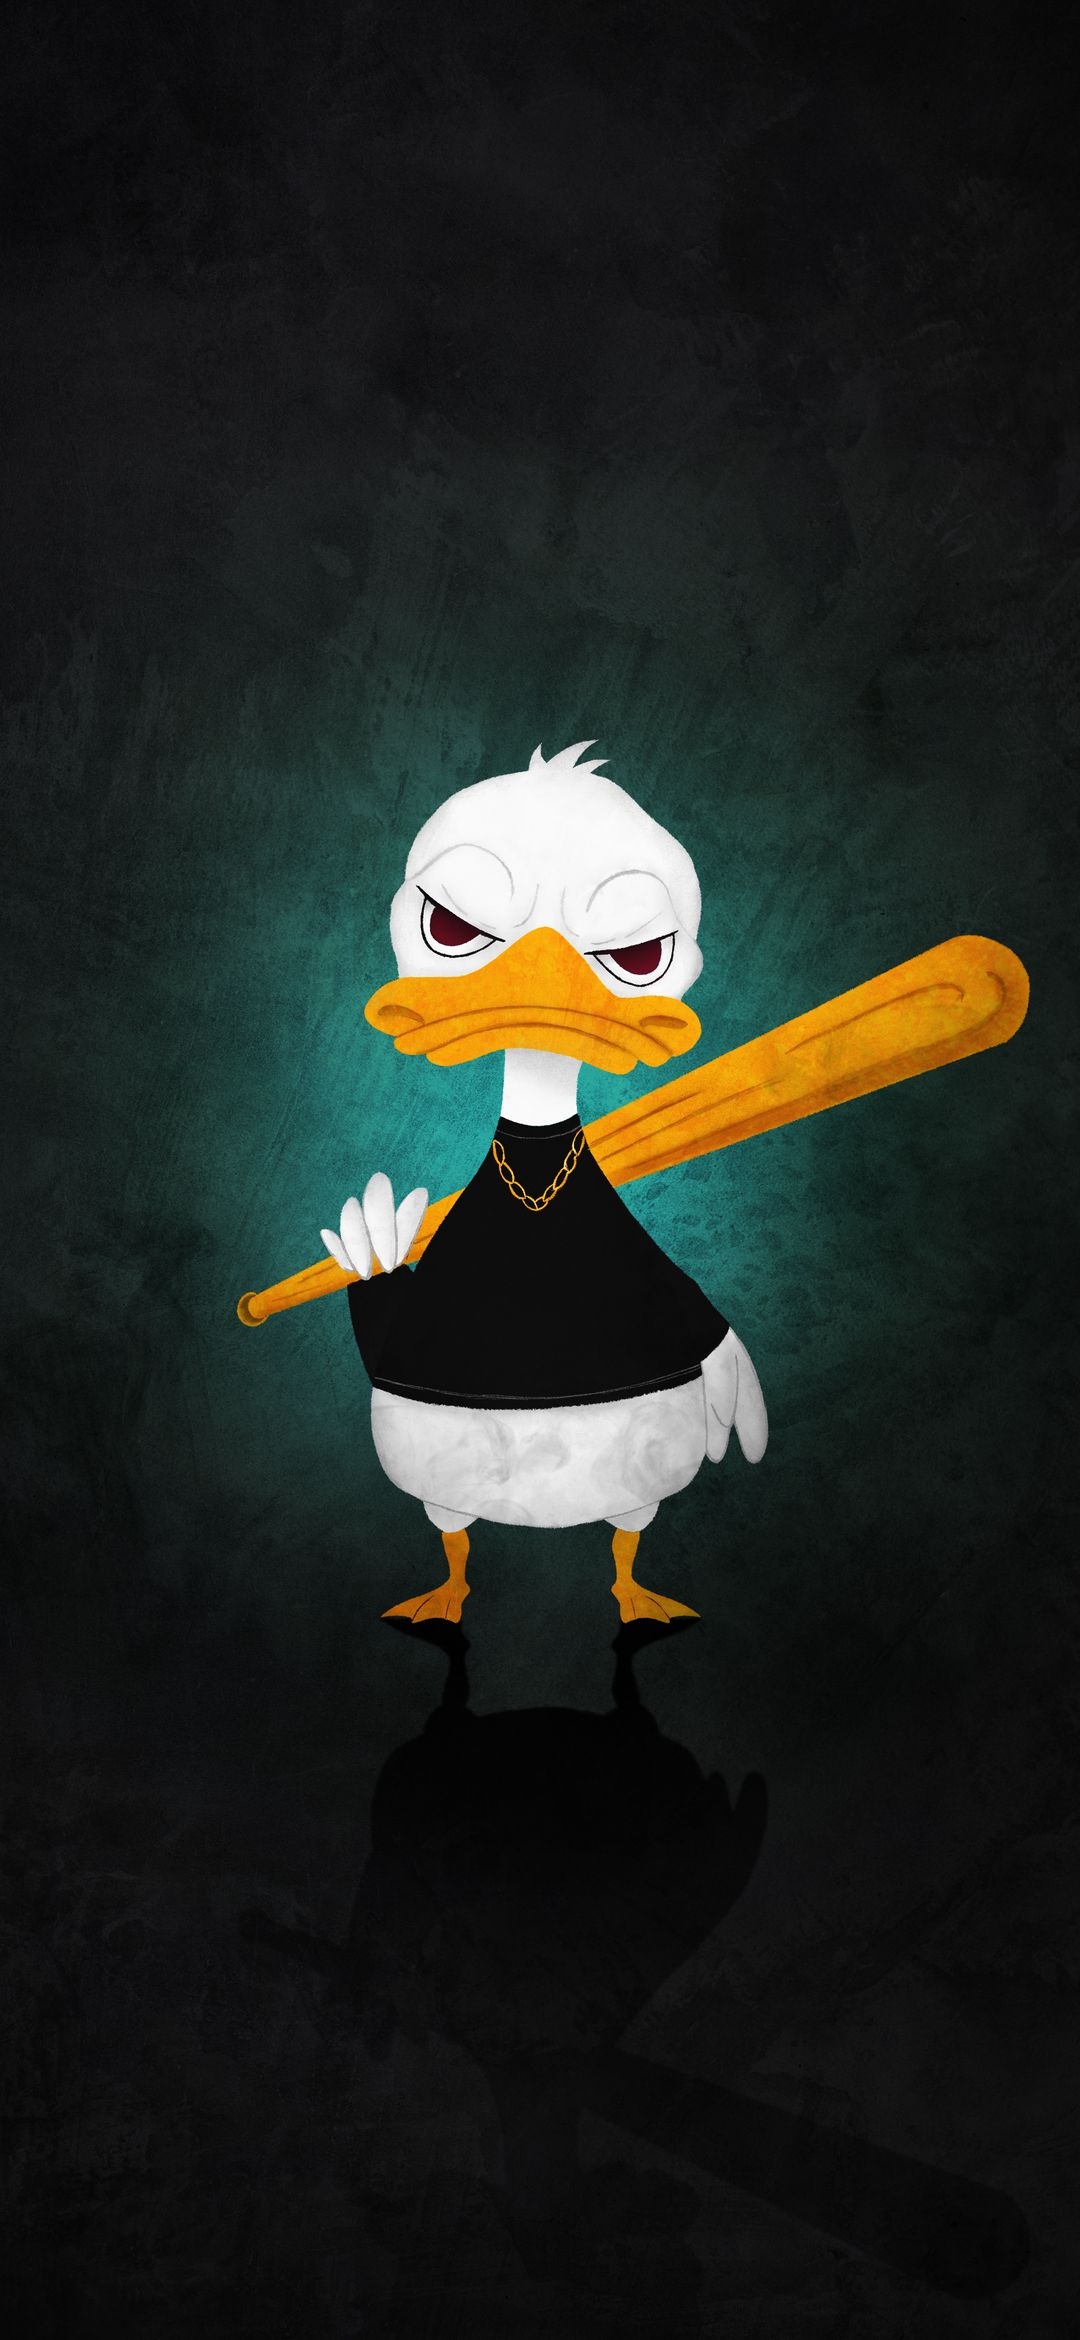 General 1080x2340 thug life Donald Duck baseball bat chains duck portrait display simple background digital art